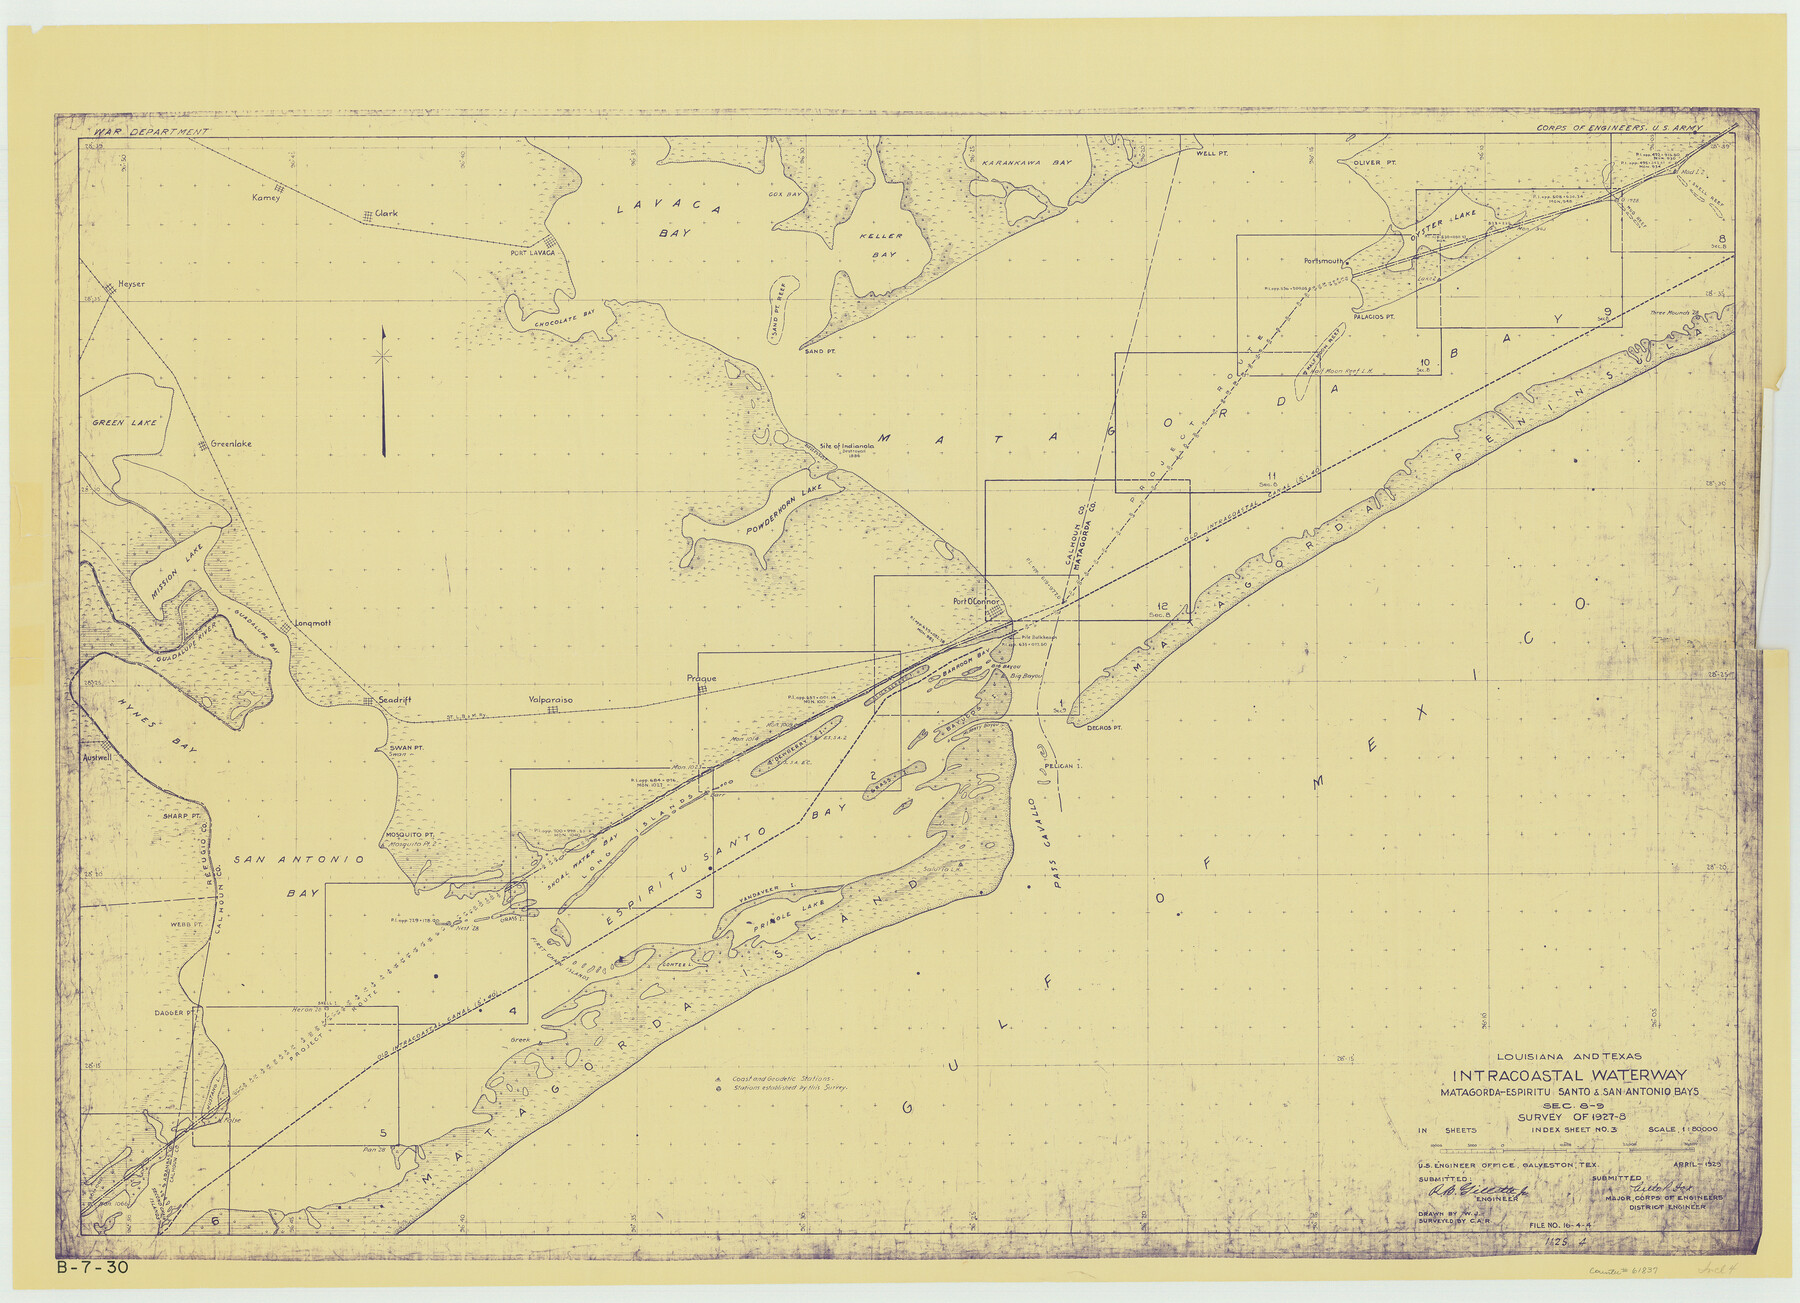 61837, Louisiana and Texas Intracoastal Waterway - Matagorda-Espiritu Santo and San Antonio Bays, Section 8-9, Survey of 1927-8 - Index Sheet 3, General Map Collection